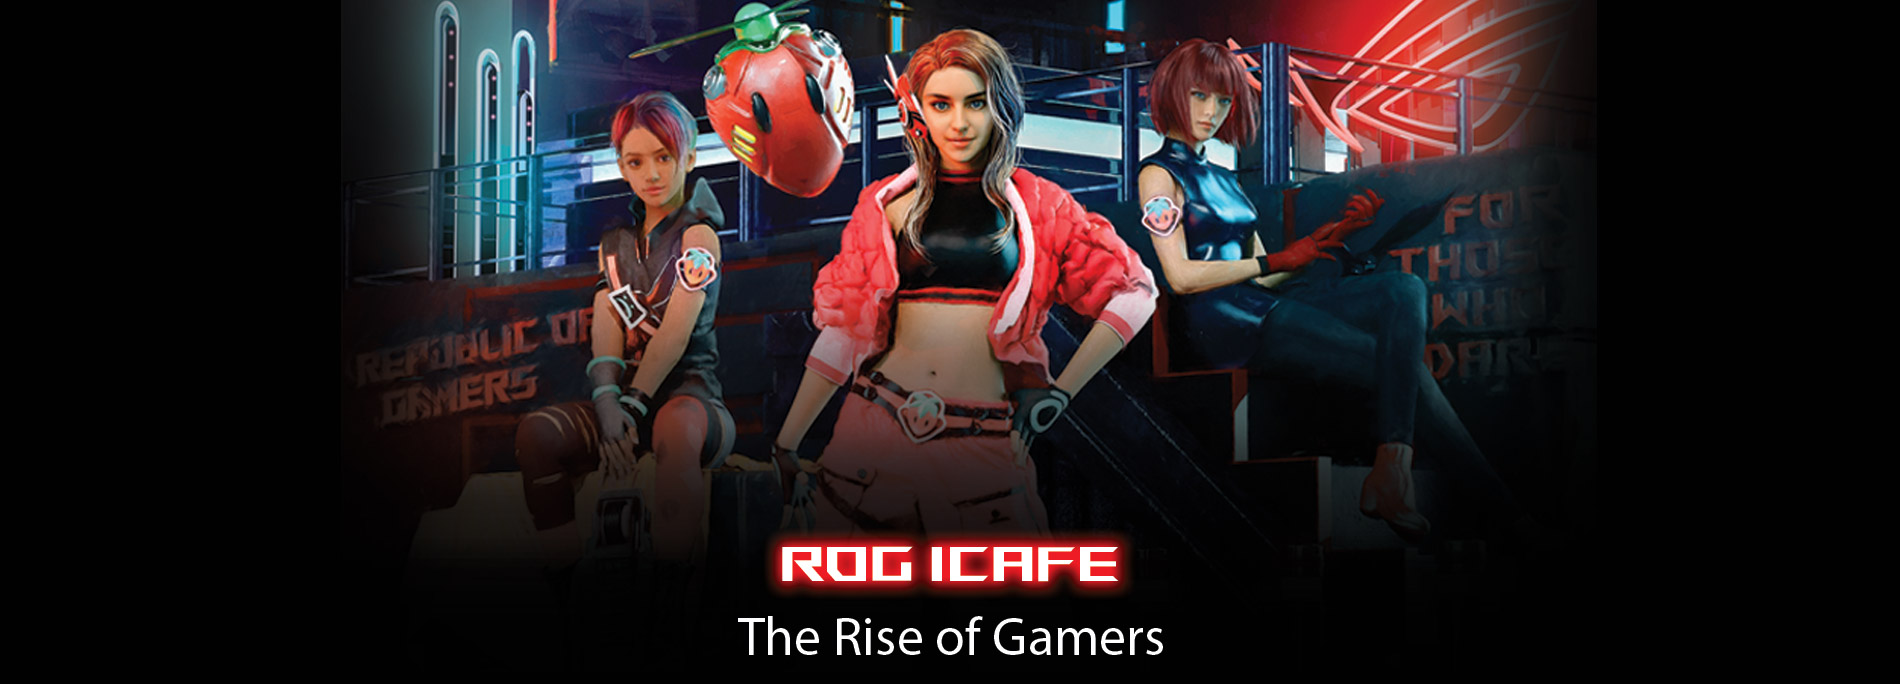 ROG iCafe Certification
ร้าน อินเตอร์เน็ตคาเฟ่ ที่เข้าร่วมเป็นพาสเนอร์กับ ROG